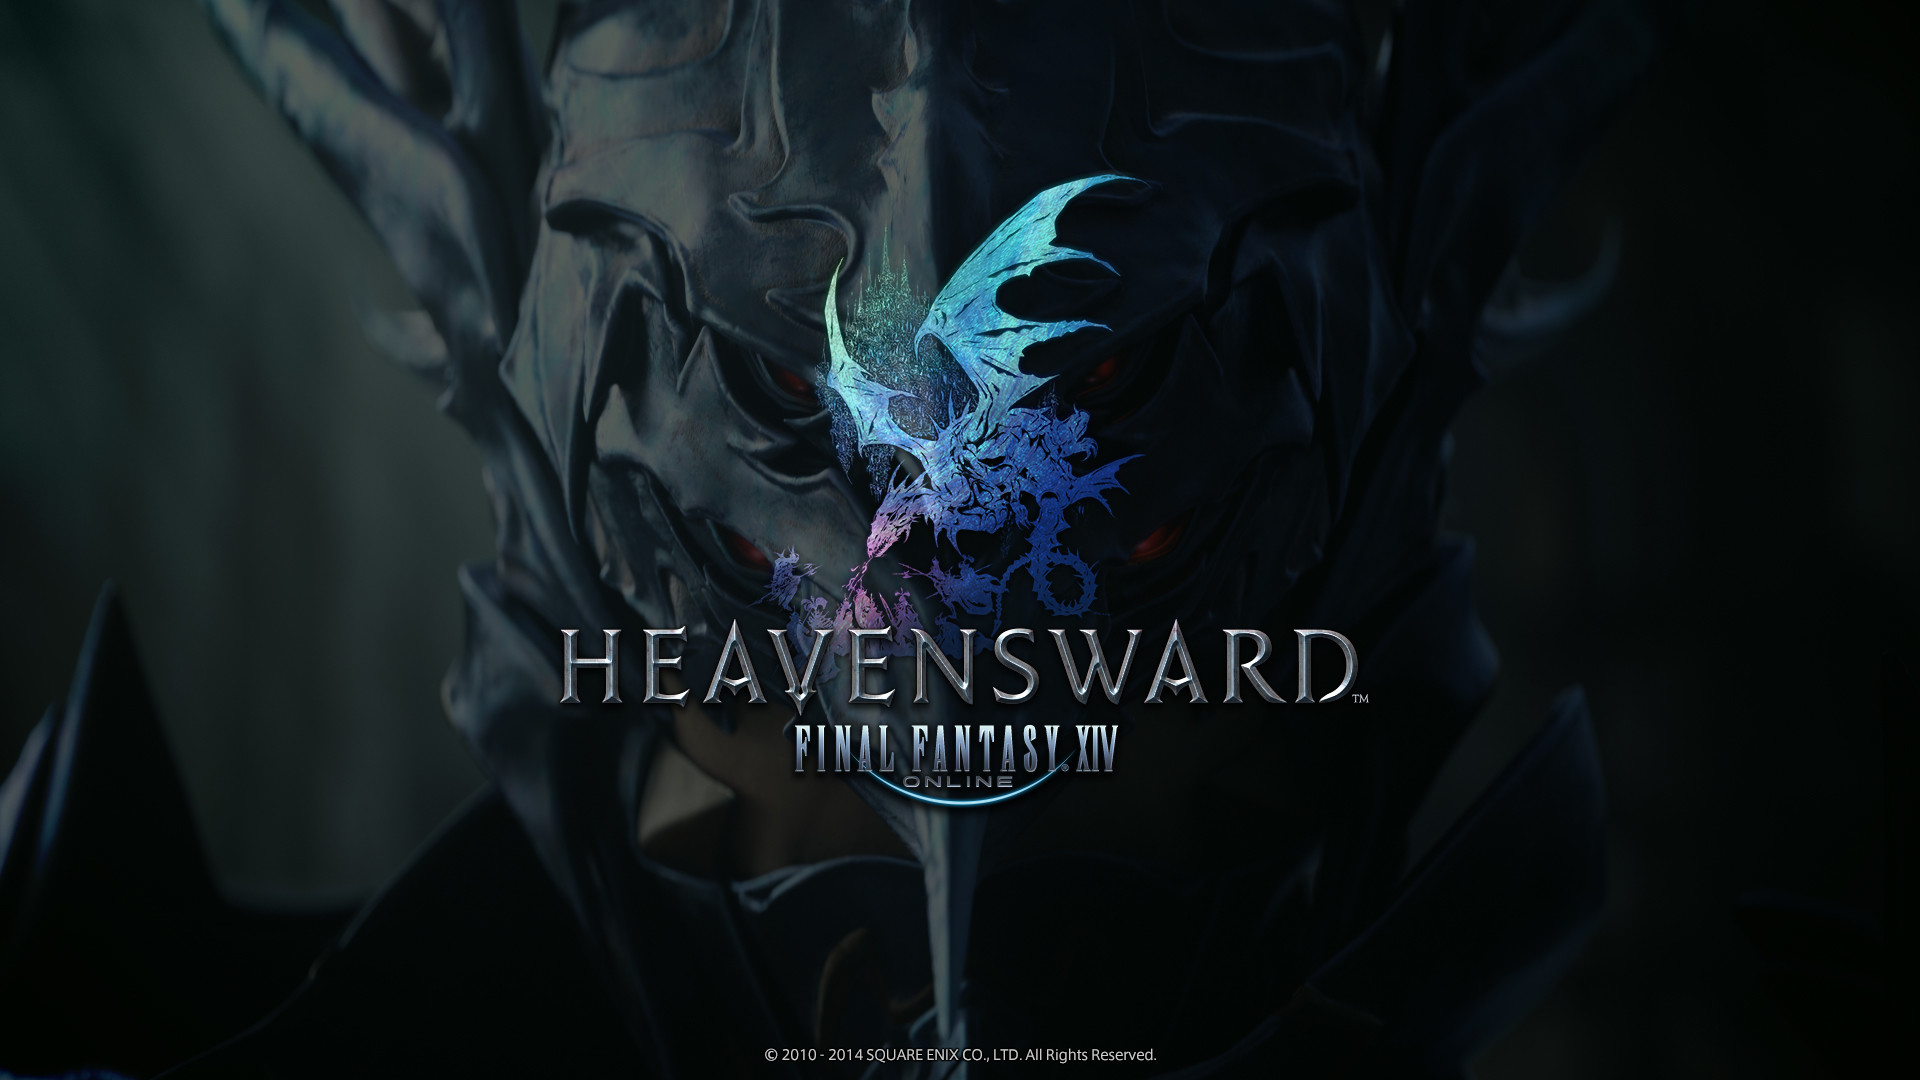 1920x1080 22 Dec Final Fantasy XIV Heavensward Expansion Adds 2 New Jobs